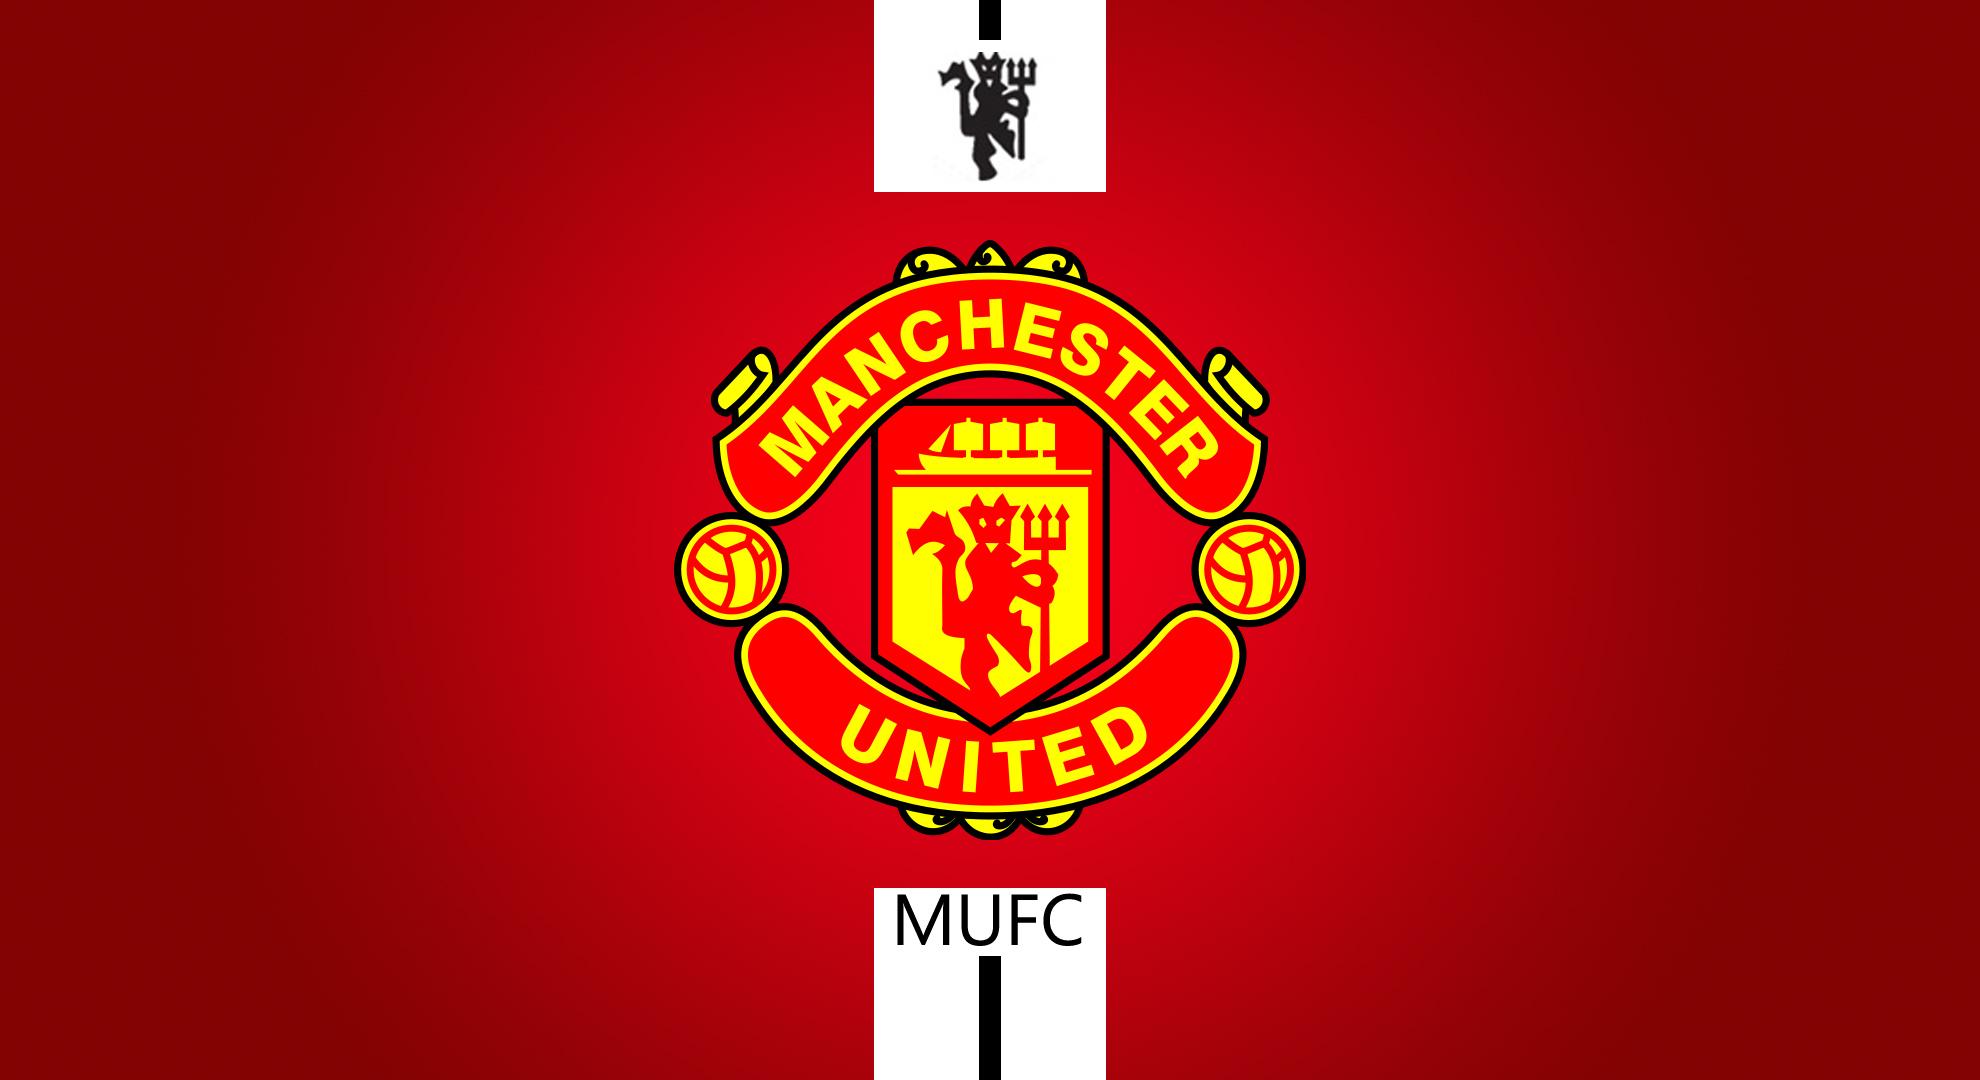 1980 x 1080 · jpeg - Manchester United Logo Wallpapers | PixelsTalk